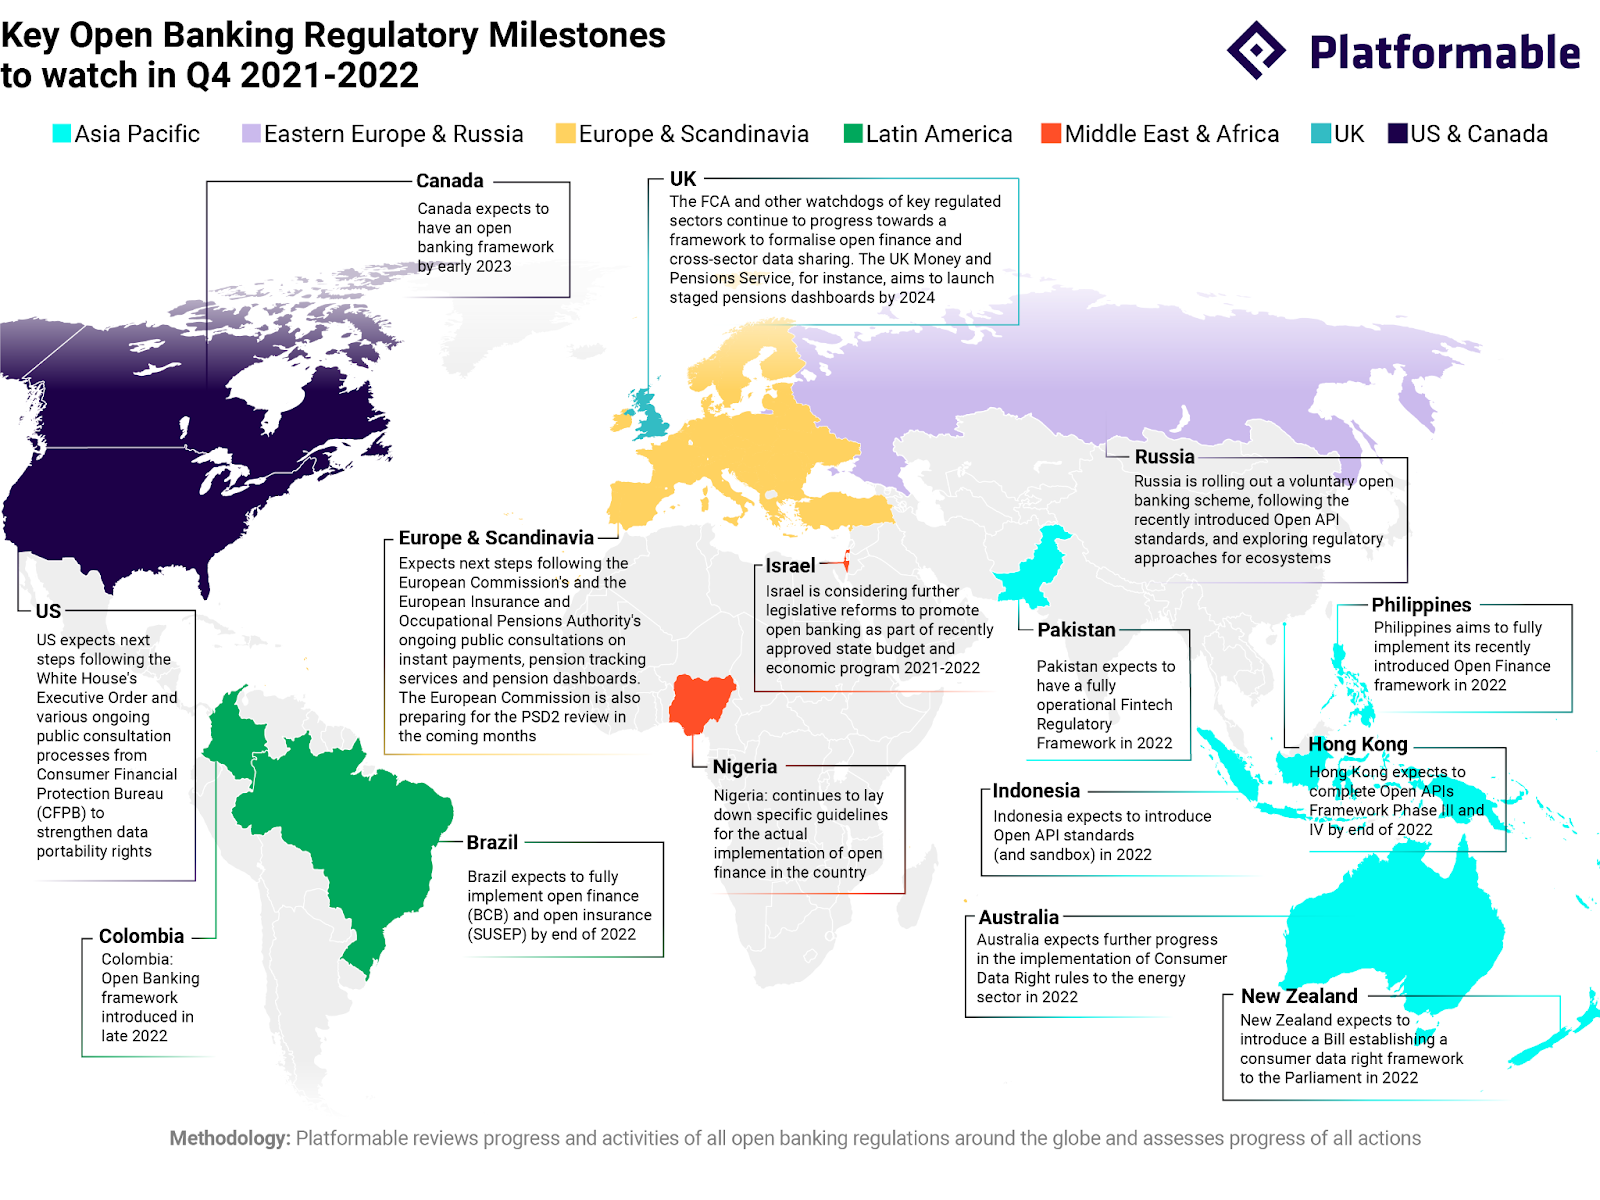 A map showing key open banking regulatory milestones around the globe Q4 2021-2022